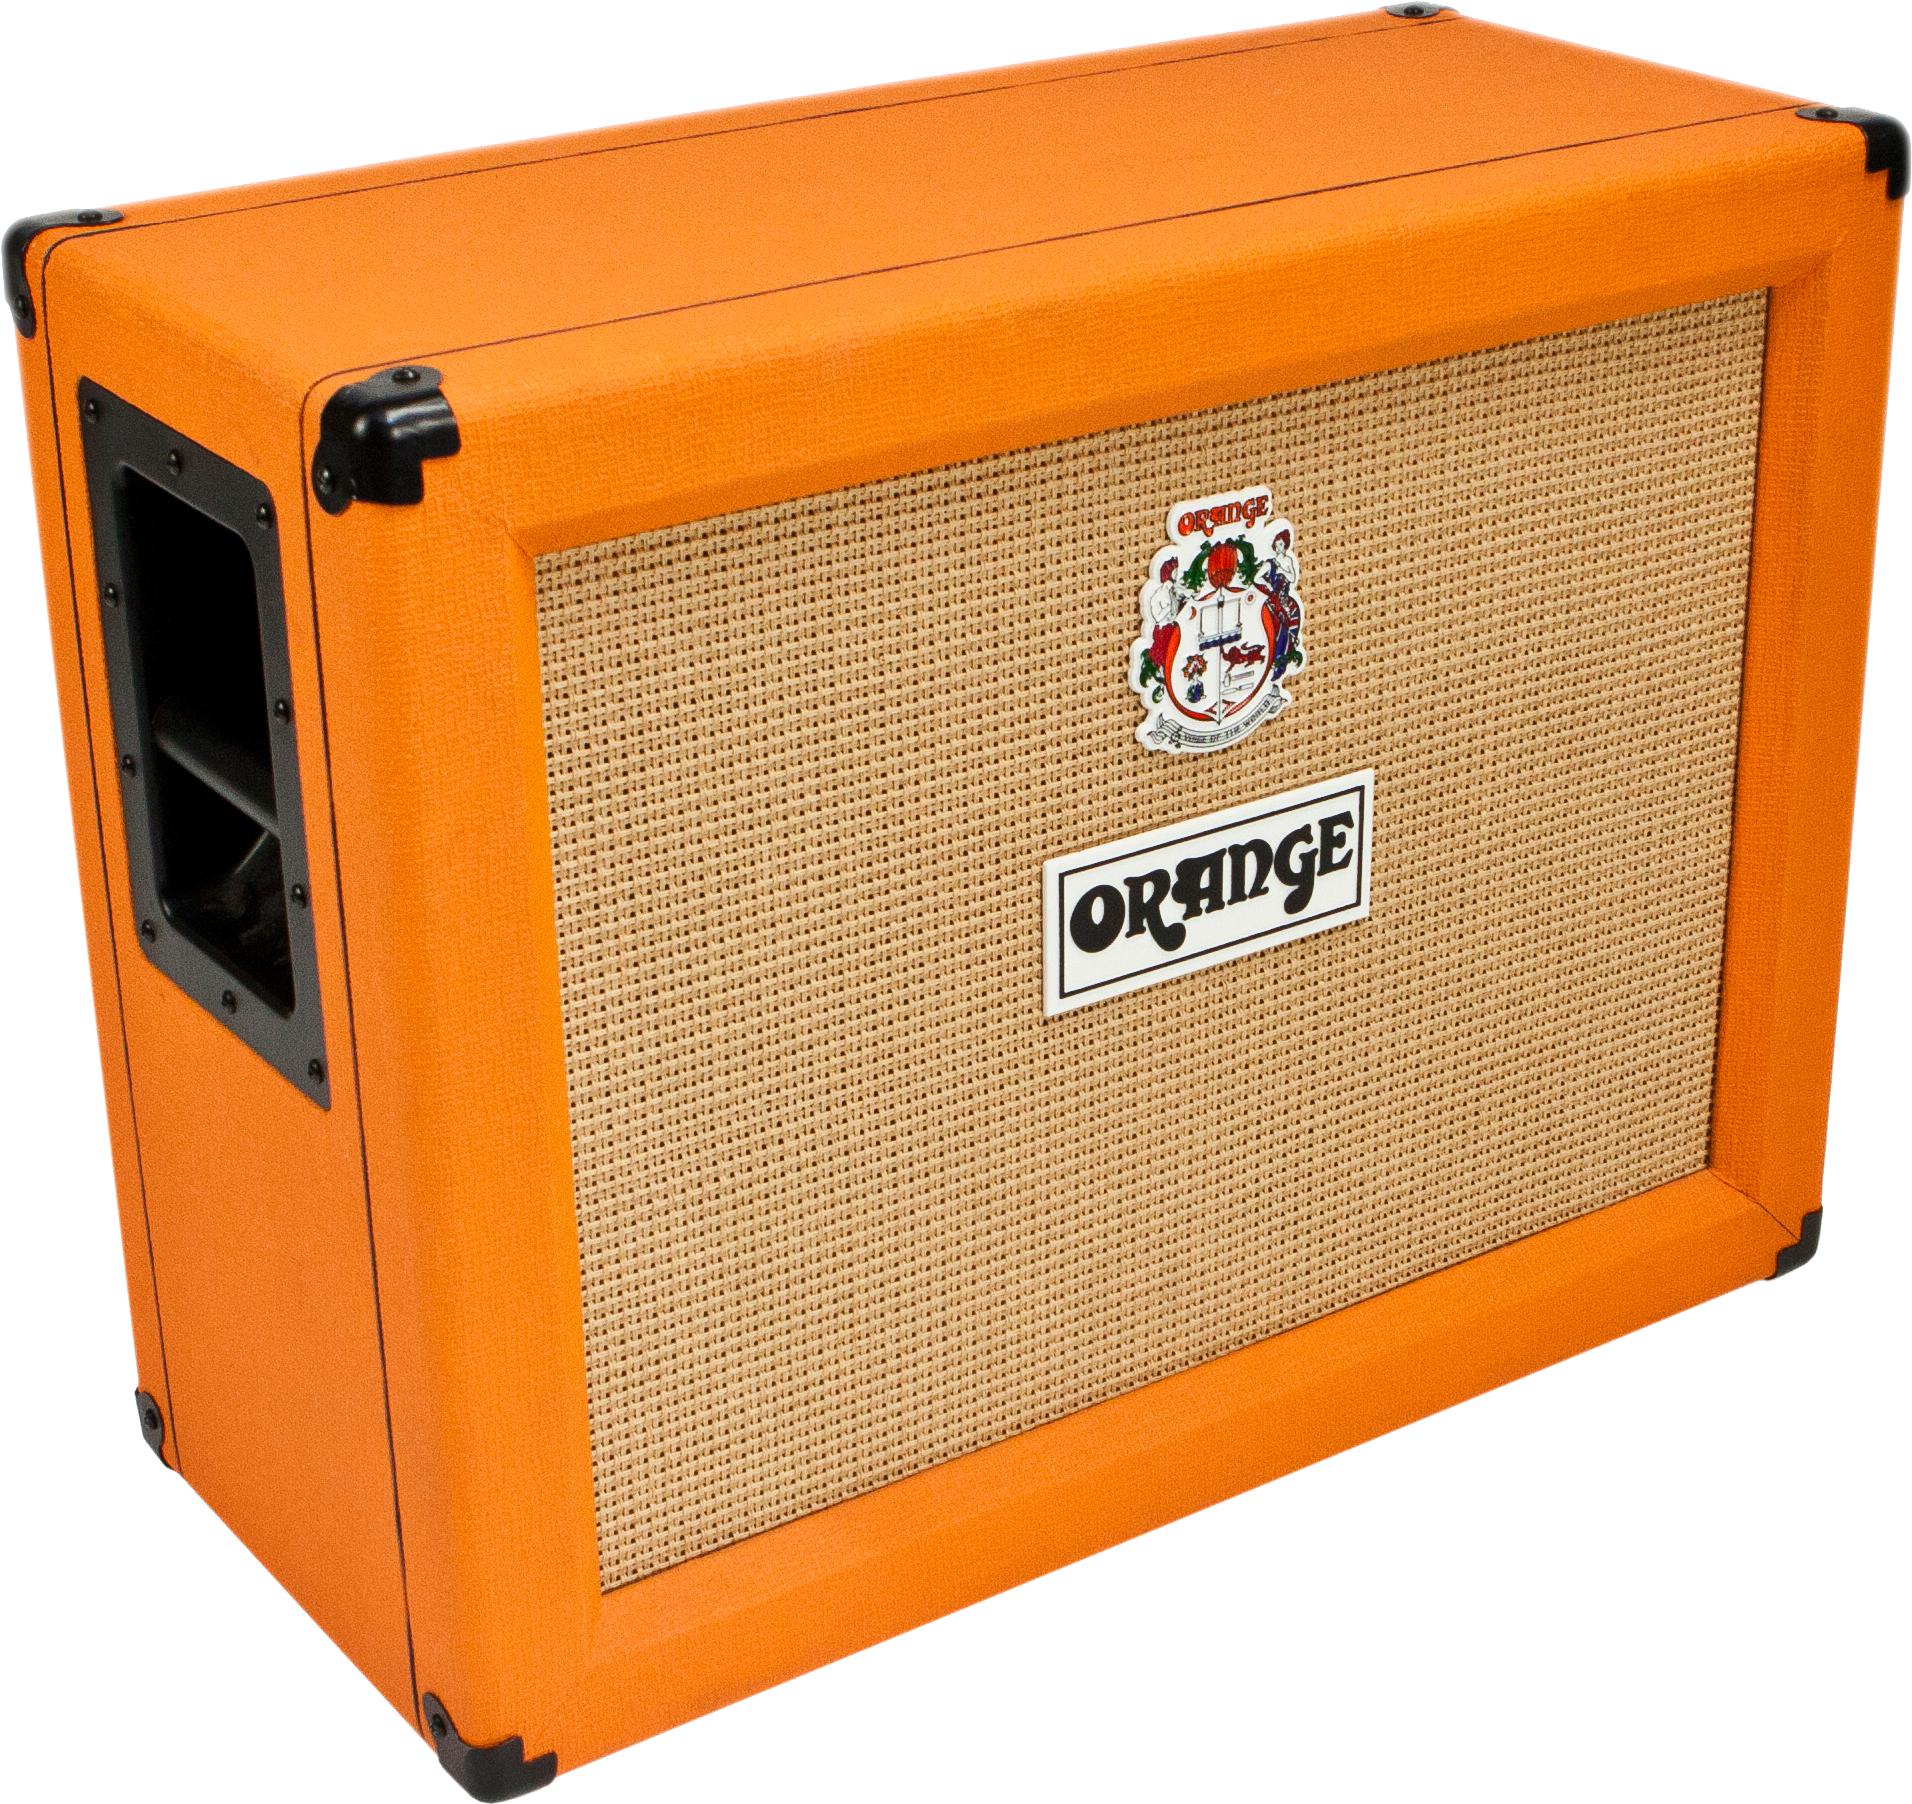 Orange - Bafle para Guitarra Eléctrica, 120 W 2 x 12 Mod.PPC212OB_45